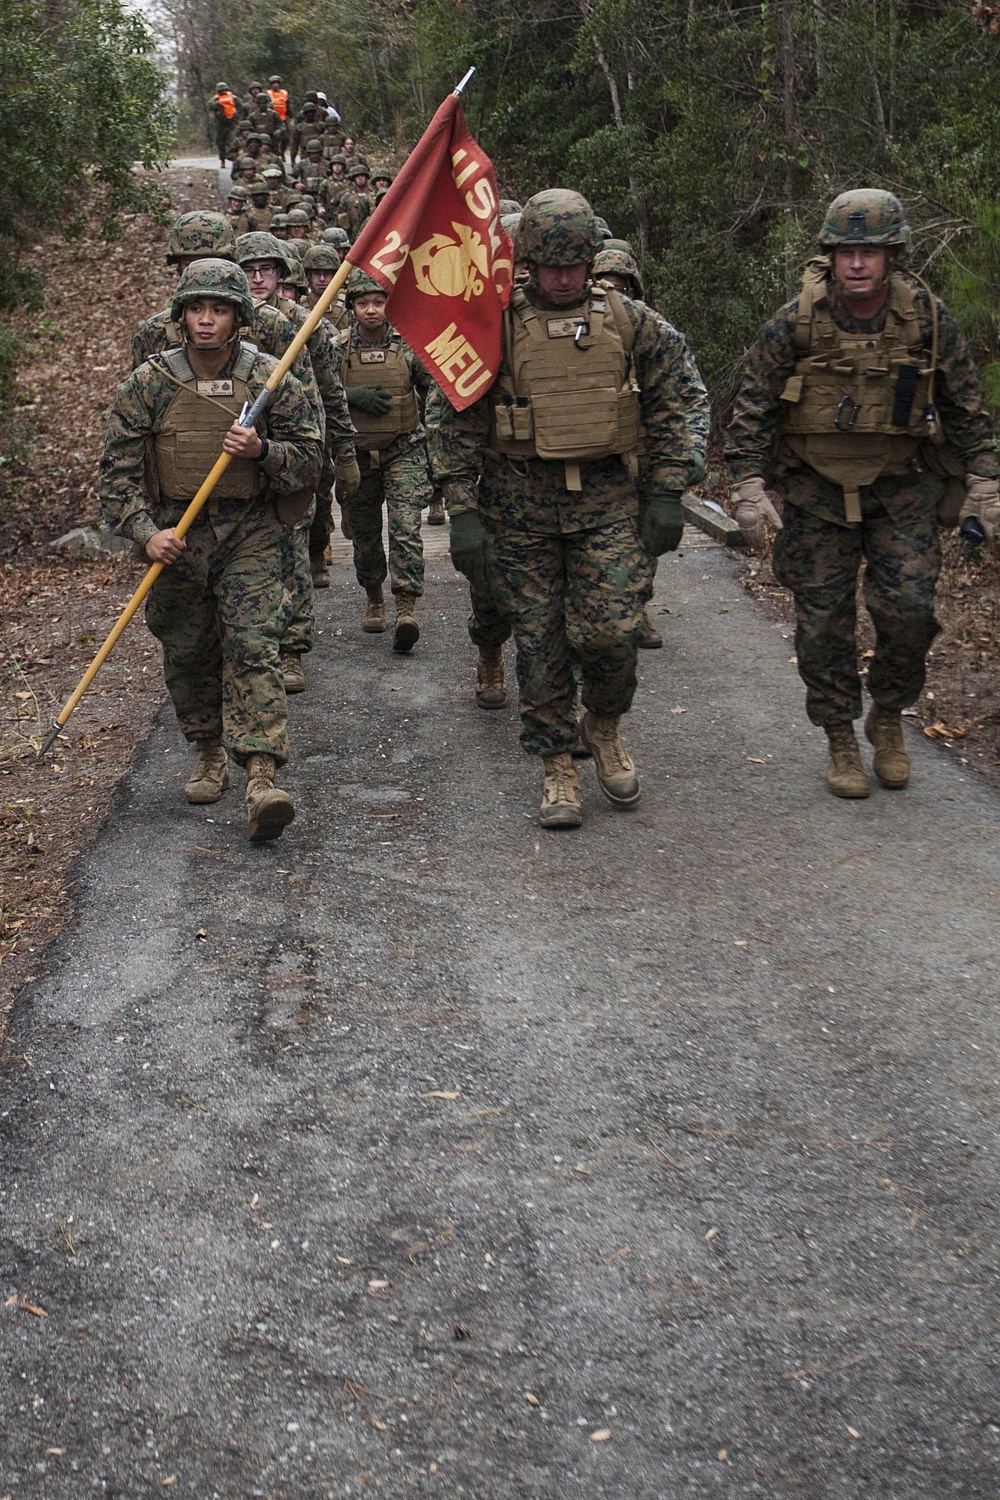 22nd MEU Marines, Sailors conduct five-mile hike